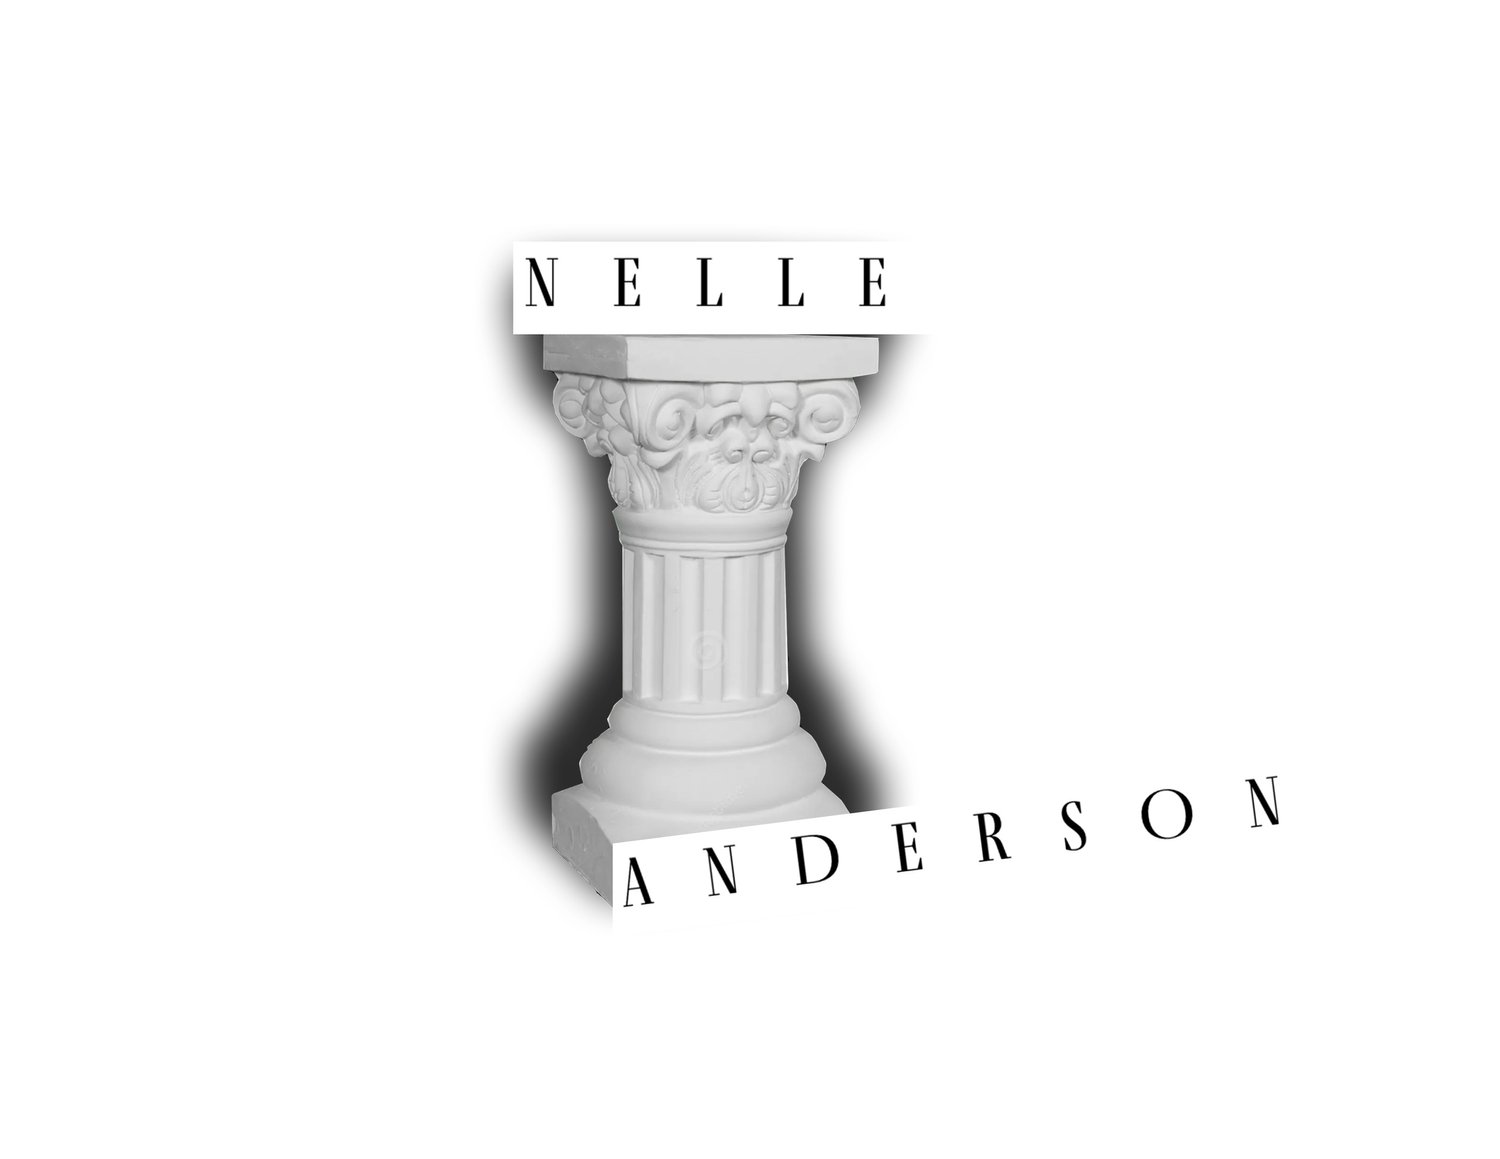 NELLE ANDERSON